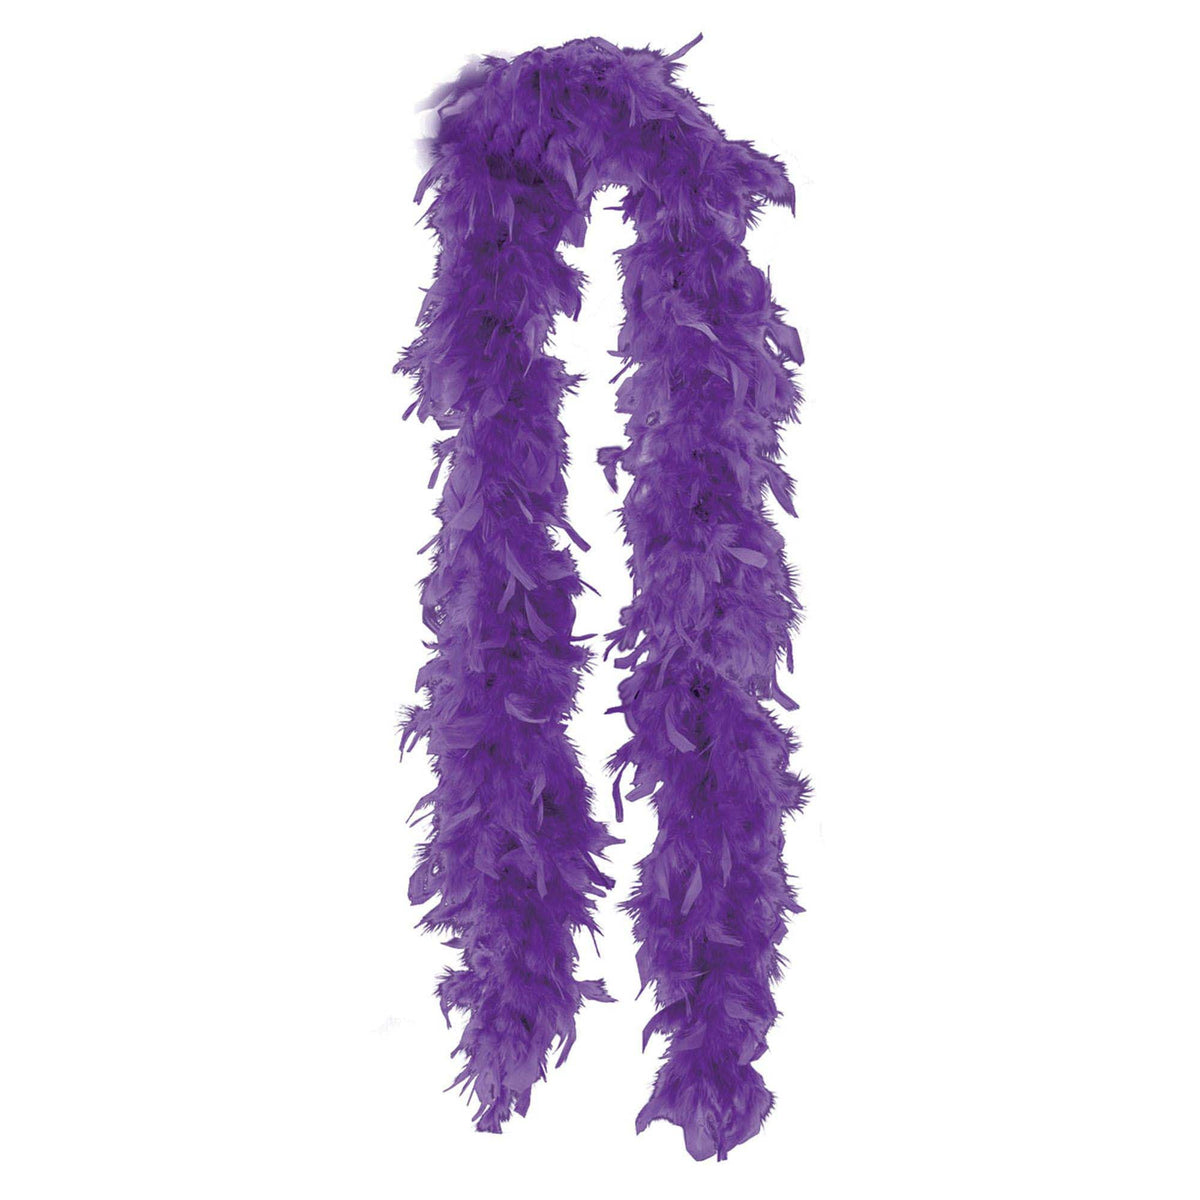 AMSCAN CA Costume Accessories Purple Feather Boa, 72 Inches, 1 Count 013051386399